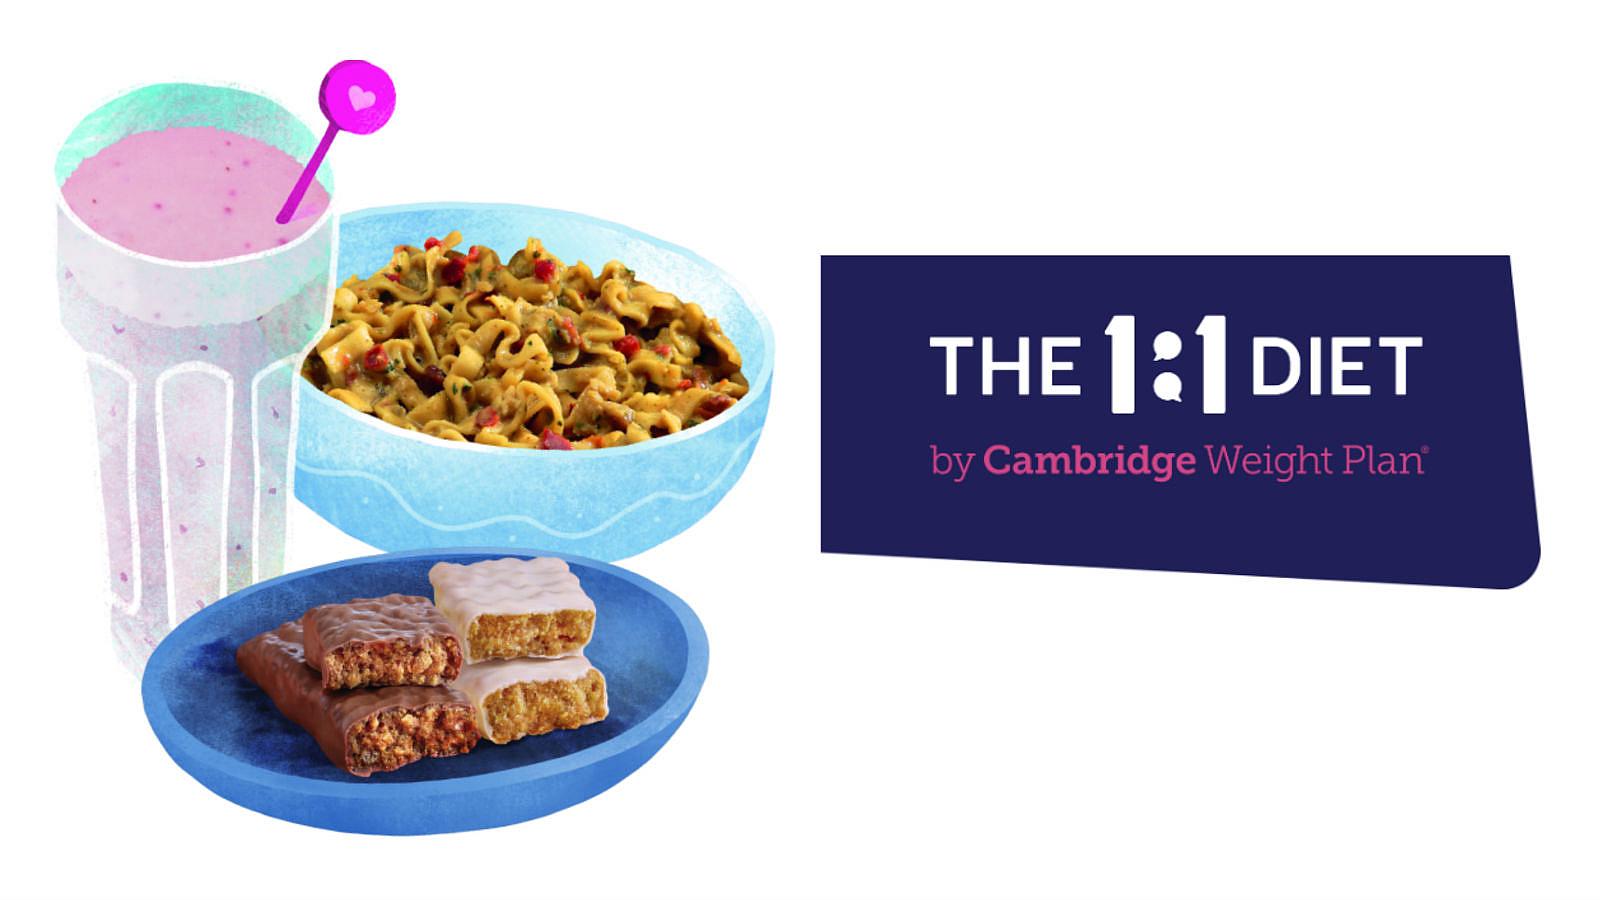 The Cambridge Diet rebrands as The 1:1 Diet